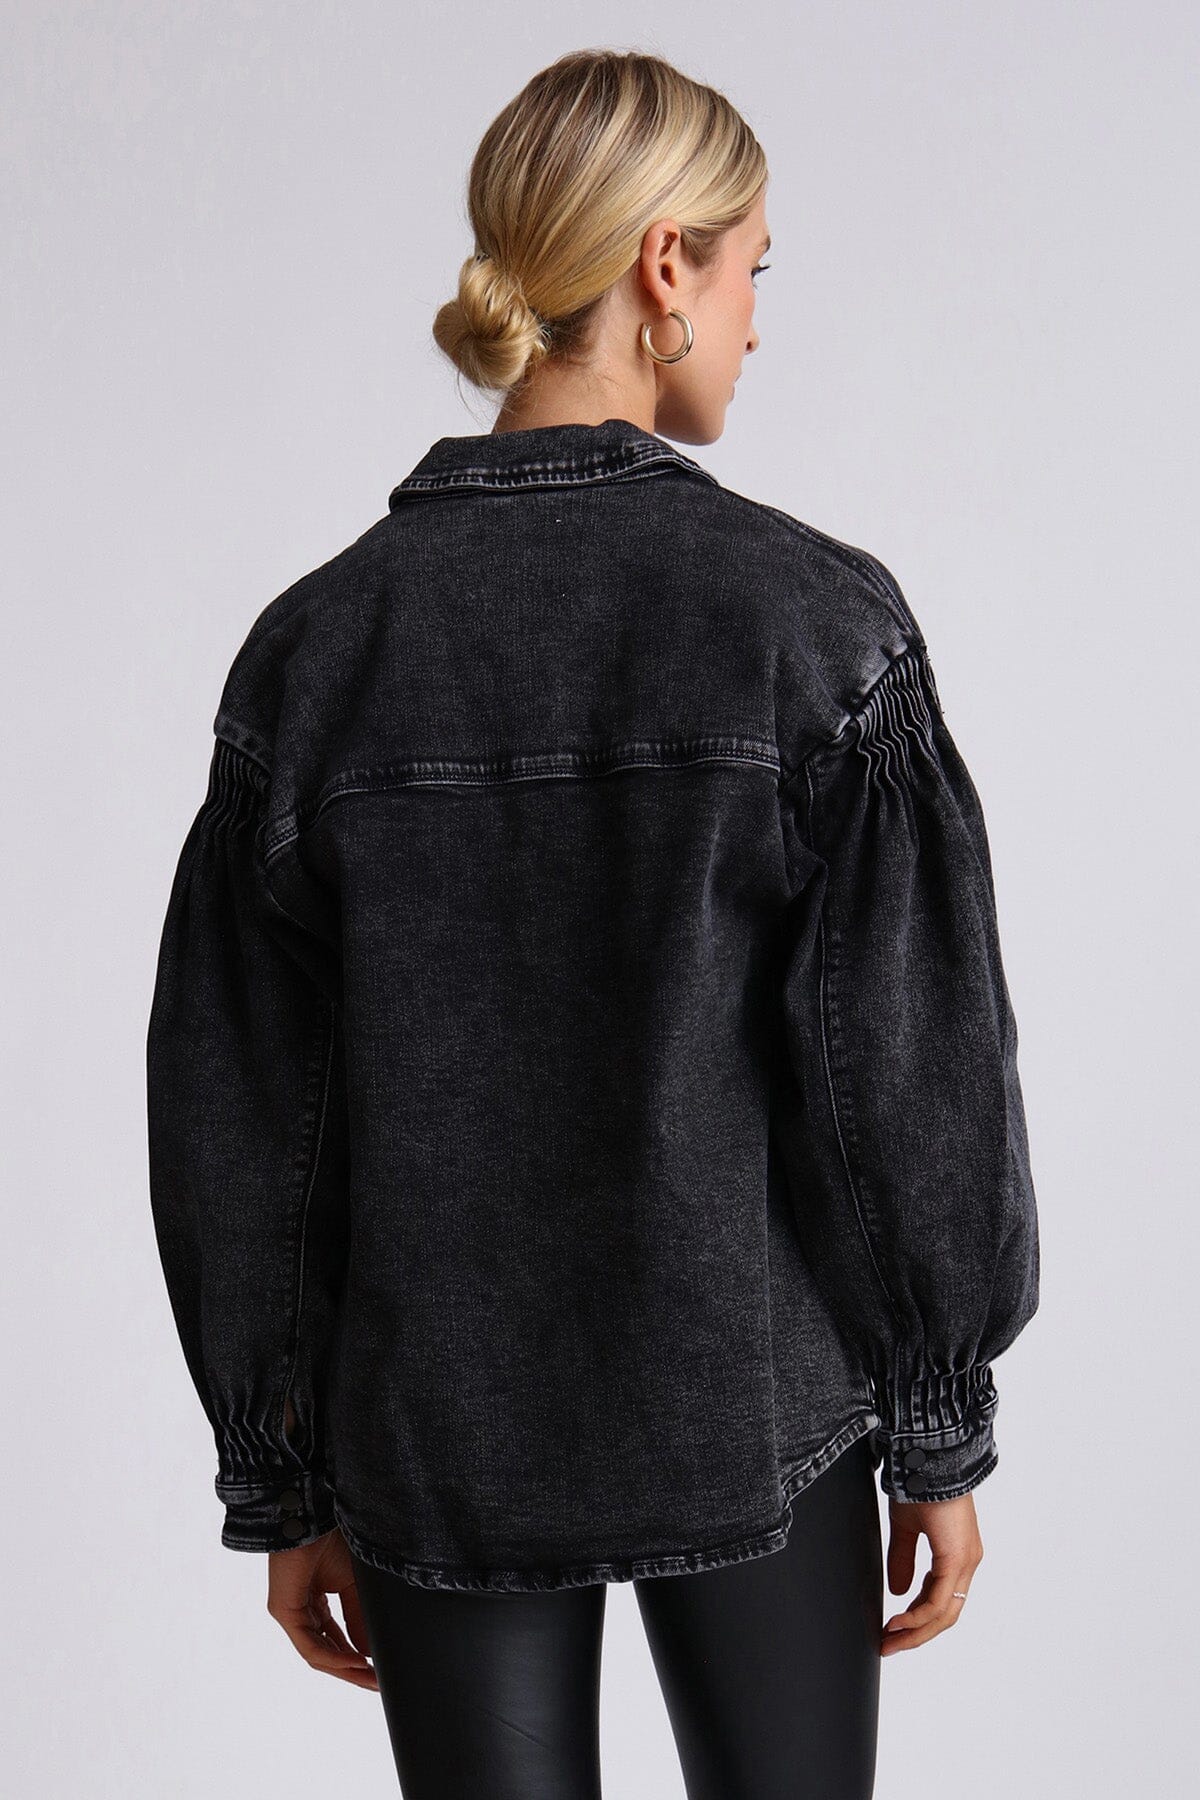 Black acid wash denim shacket jacket coat - figure flattering women's outerwear for fall